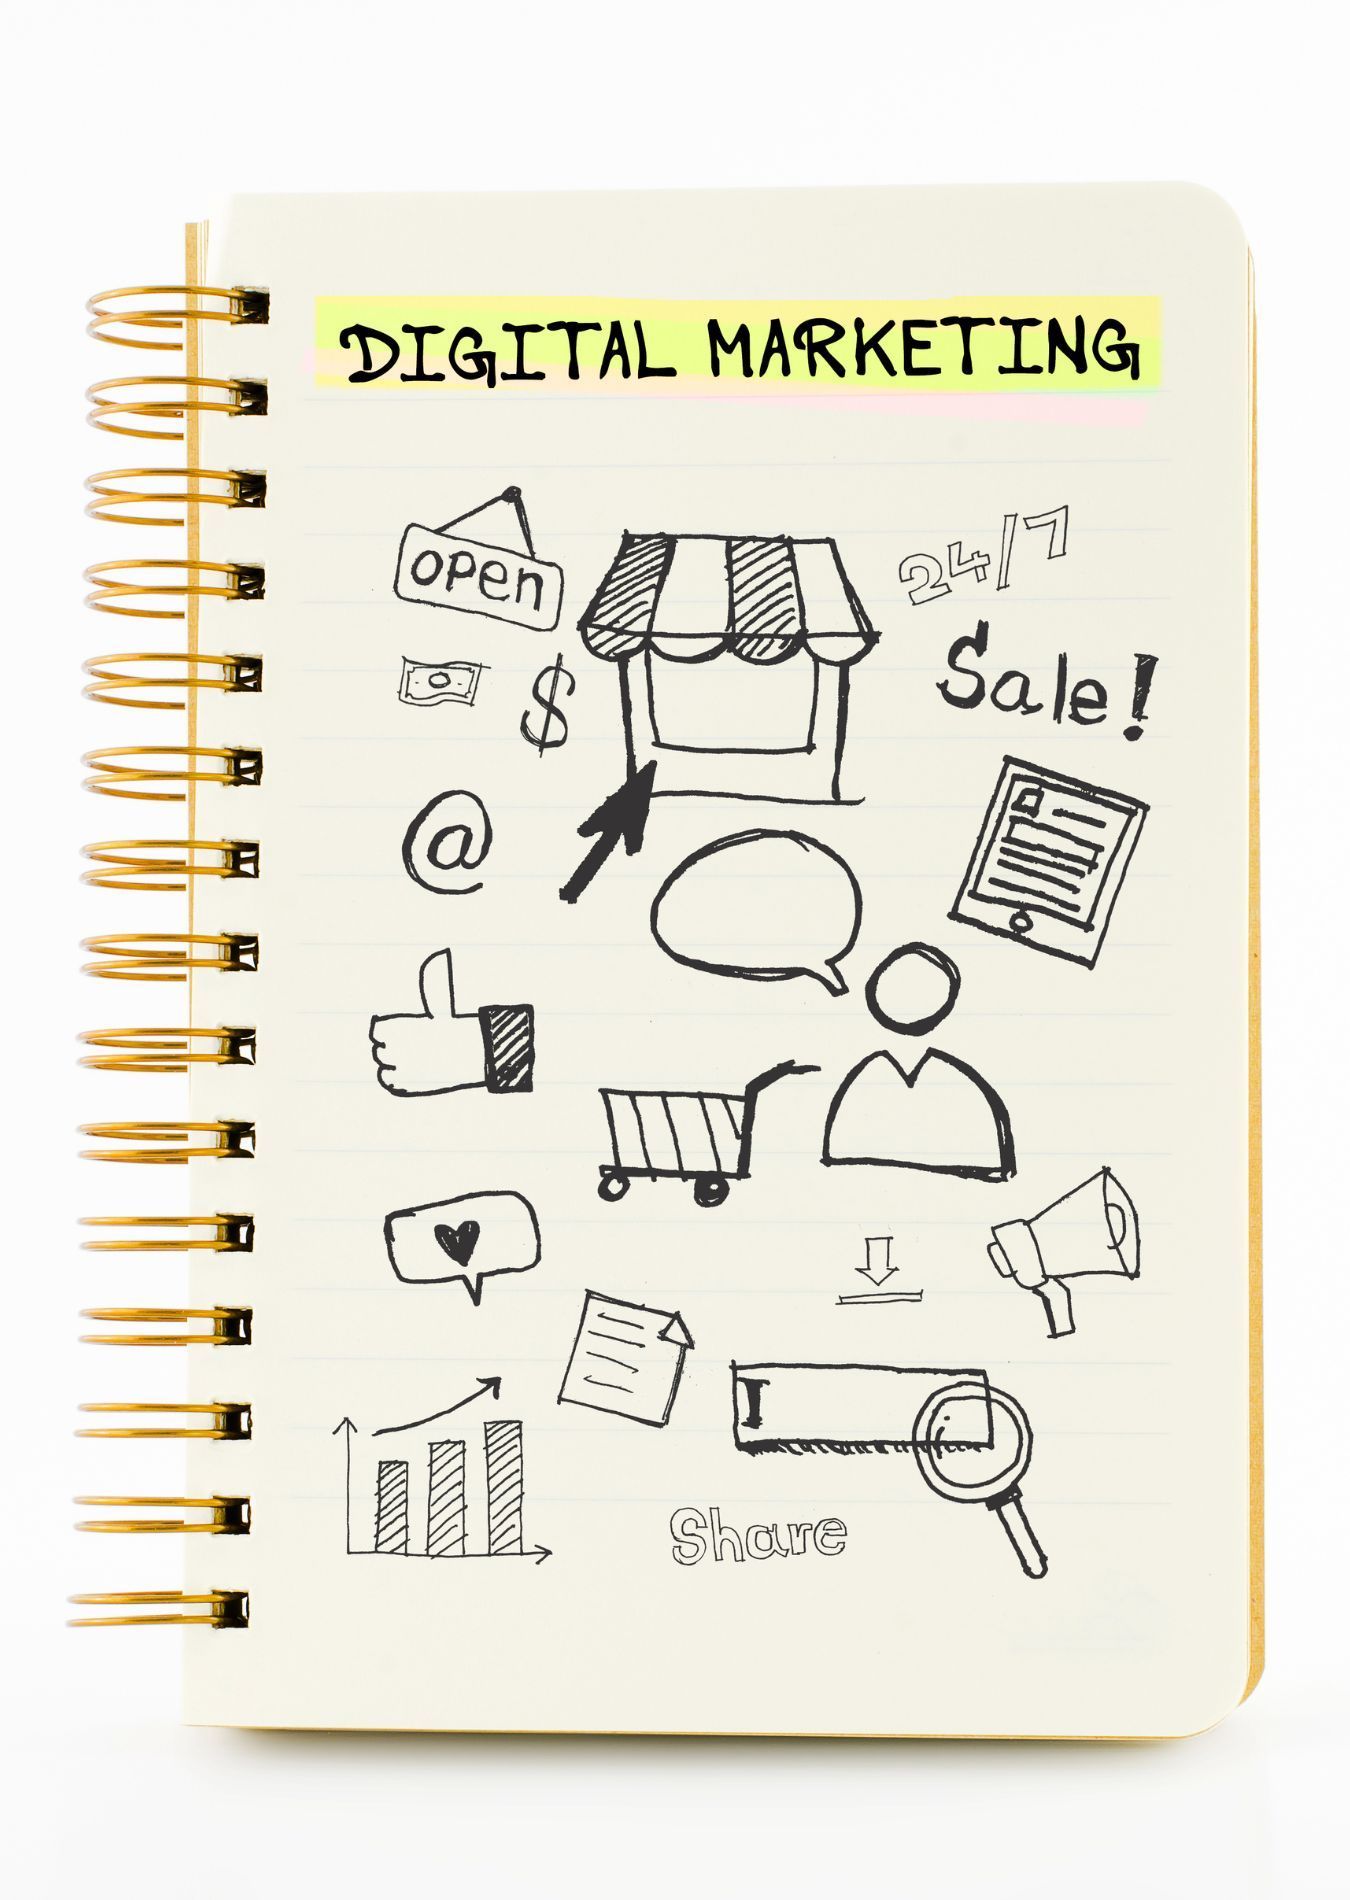 Atlanta GA digital marketing company plan